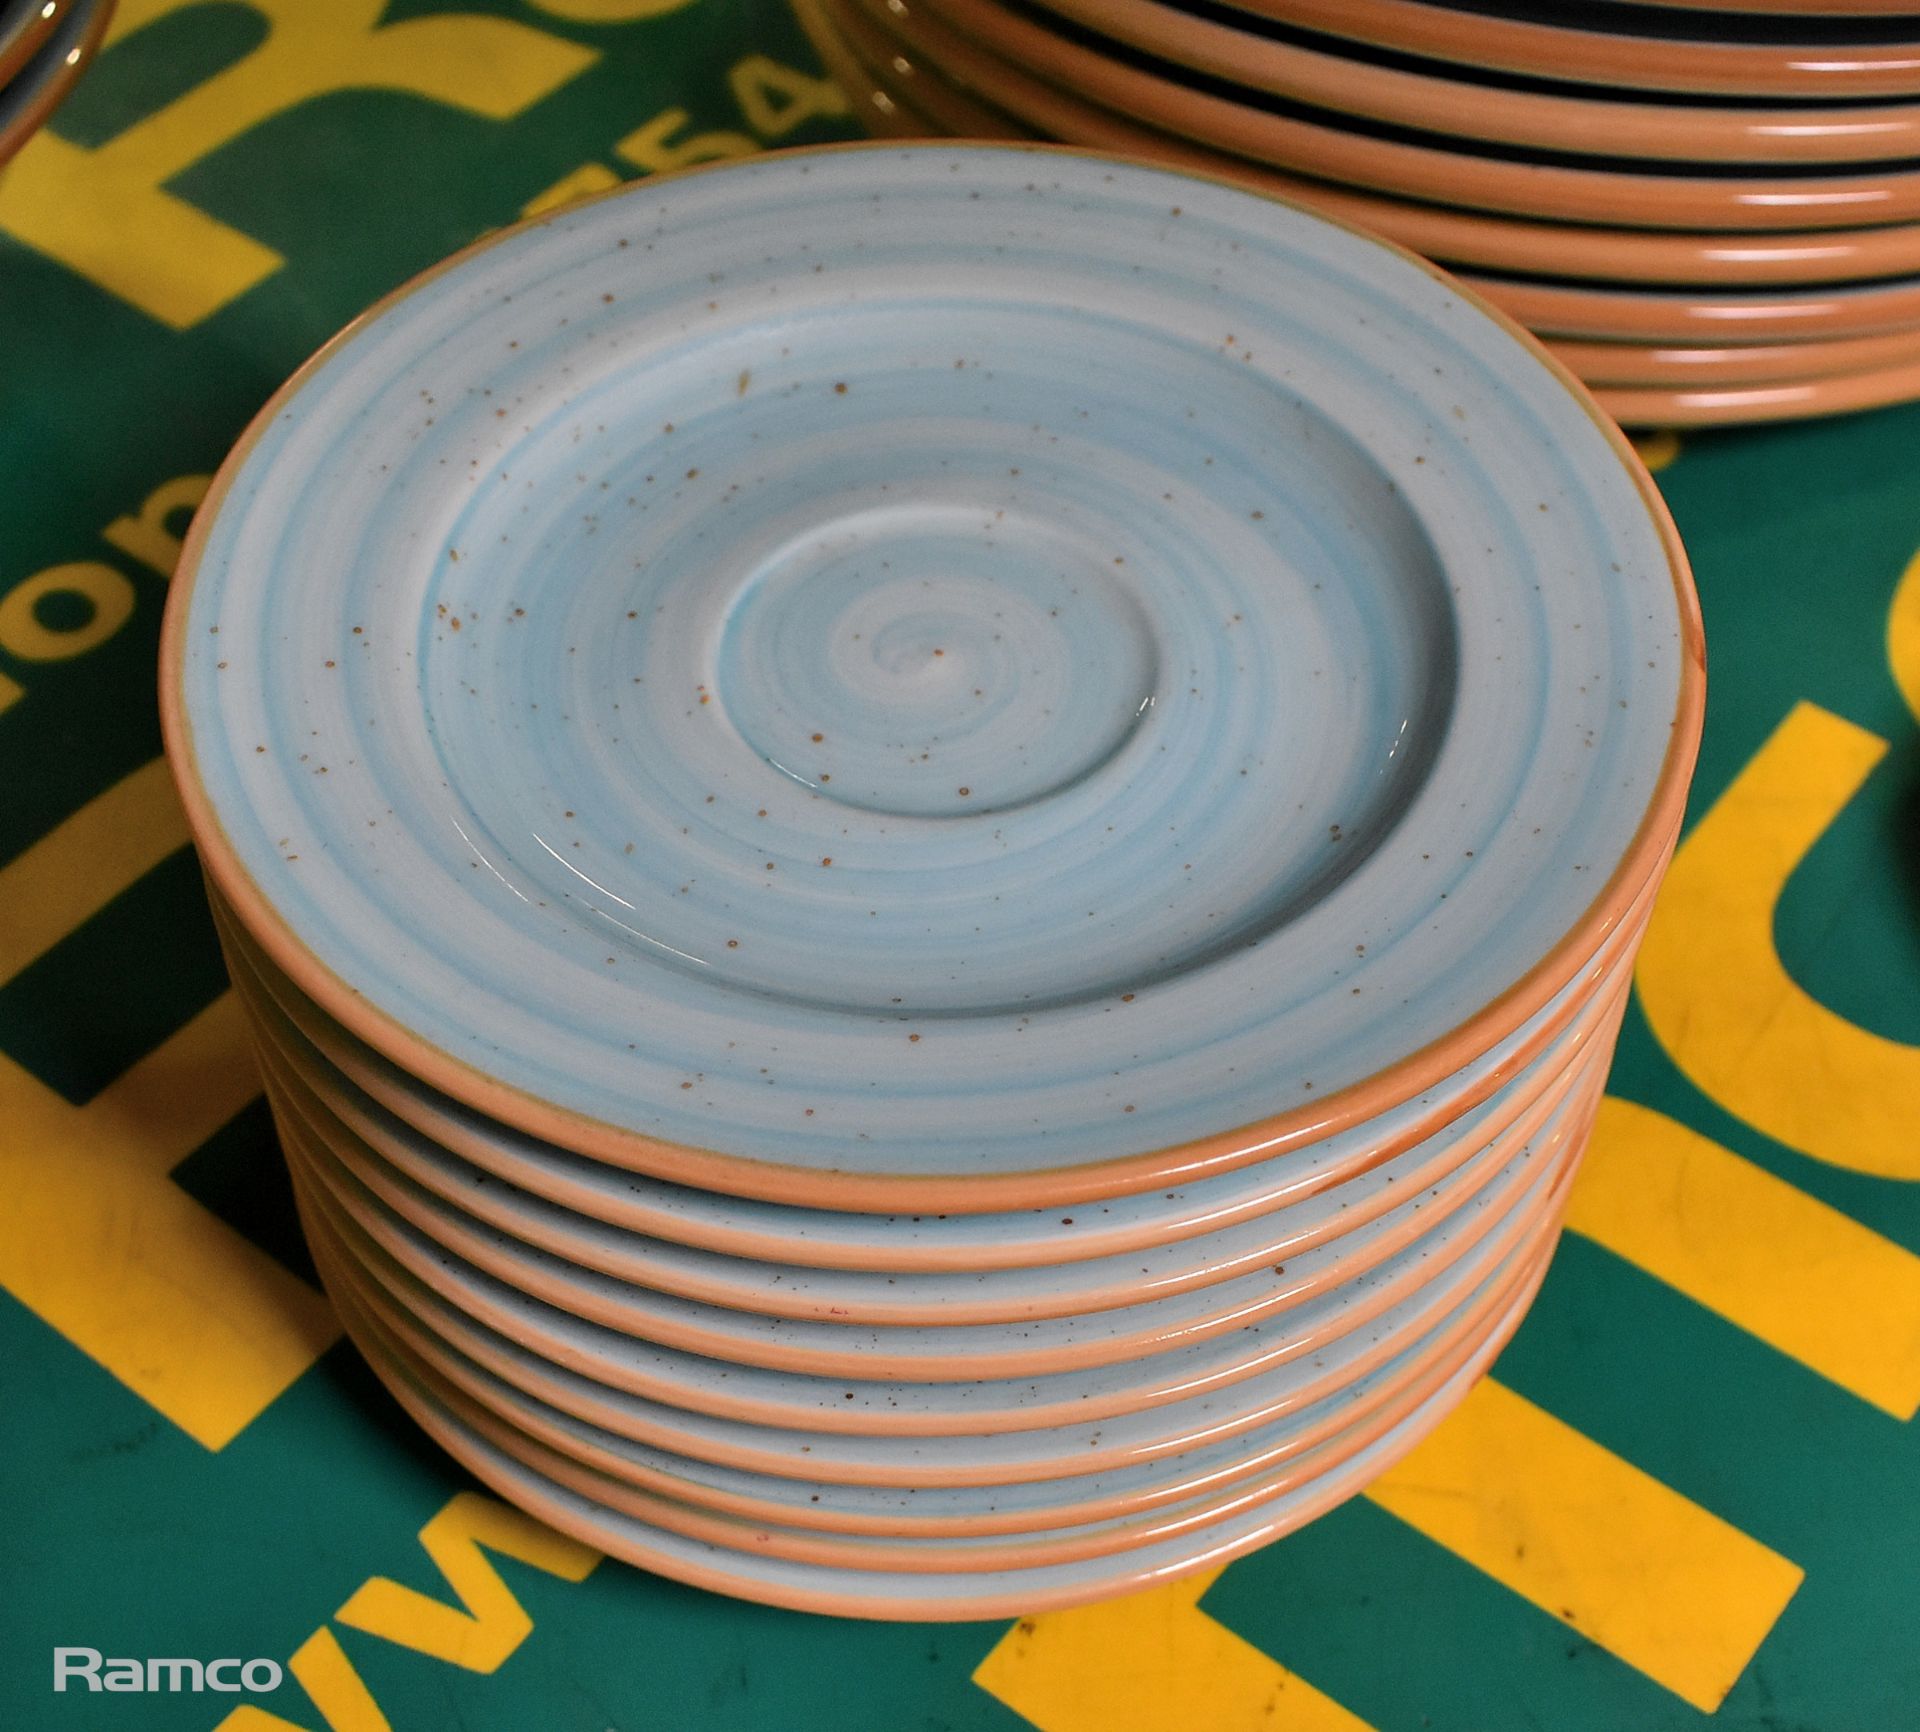 Bonna Premium Porcelain Aura Aqua crockery set: cups, saucers, plates and bowls - Image 2 of 4